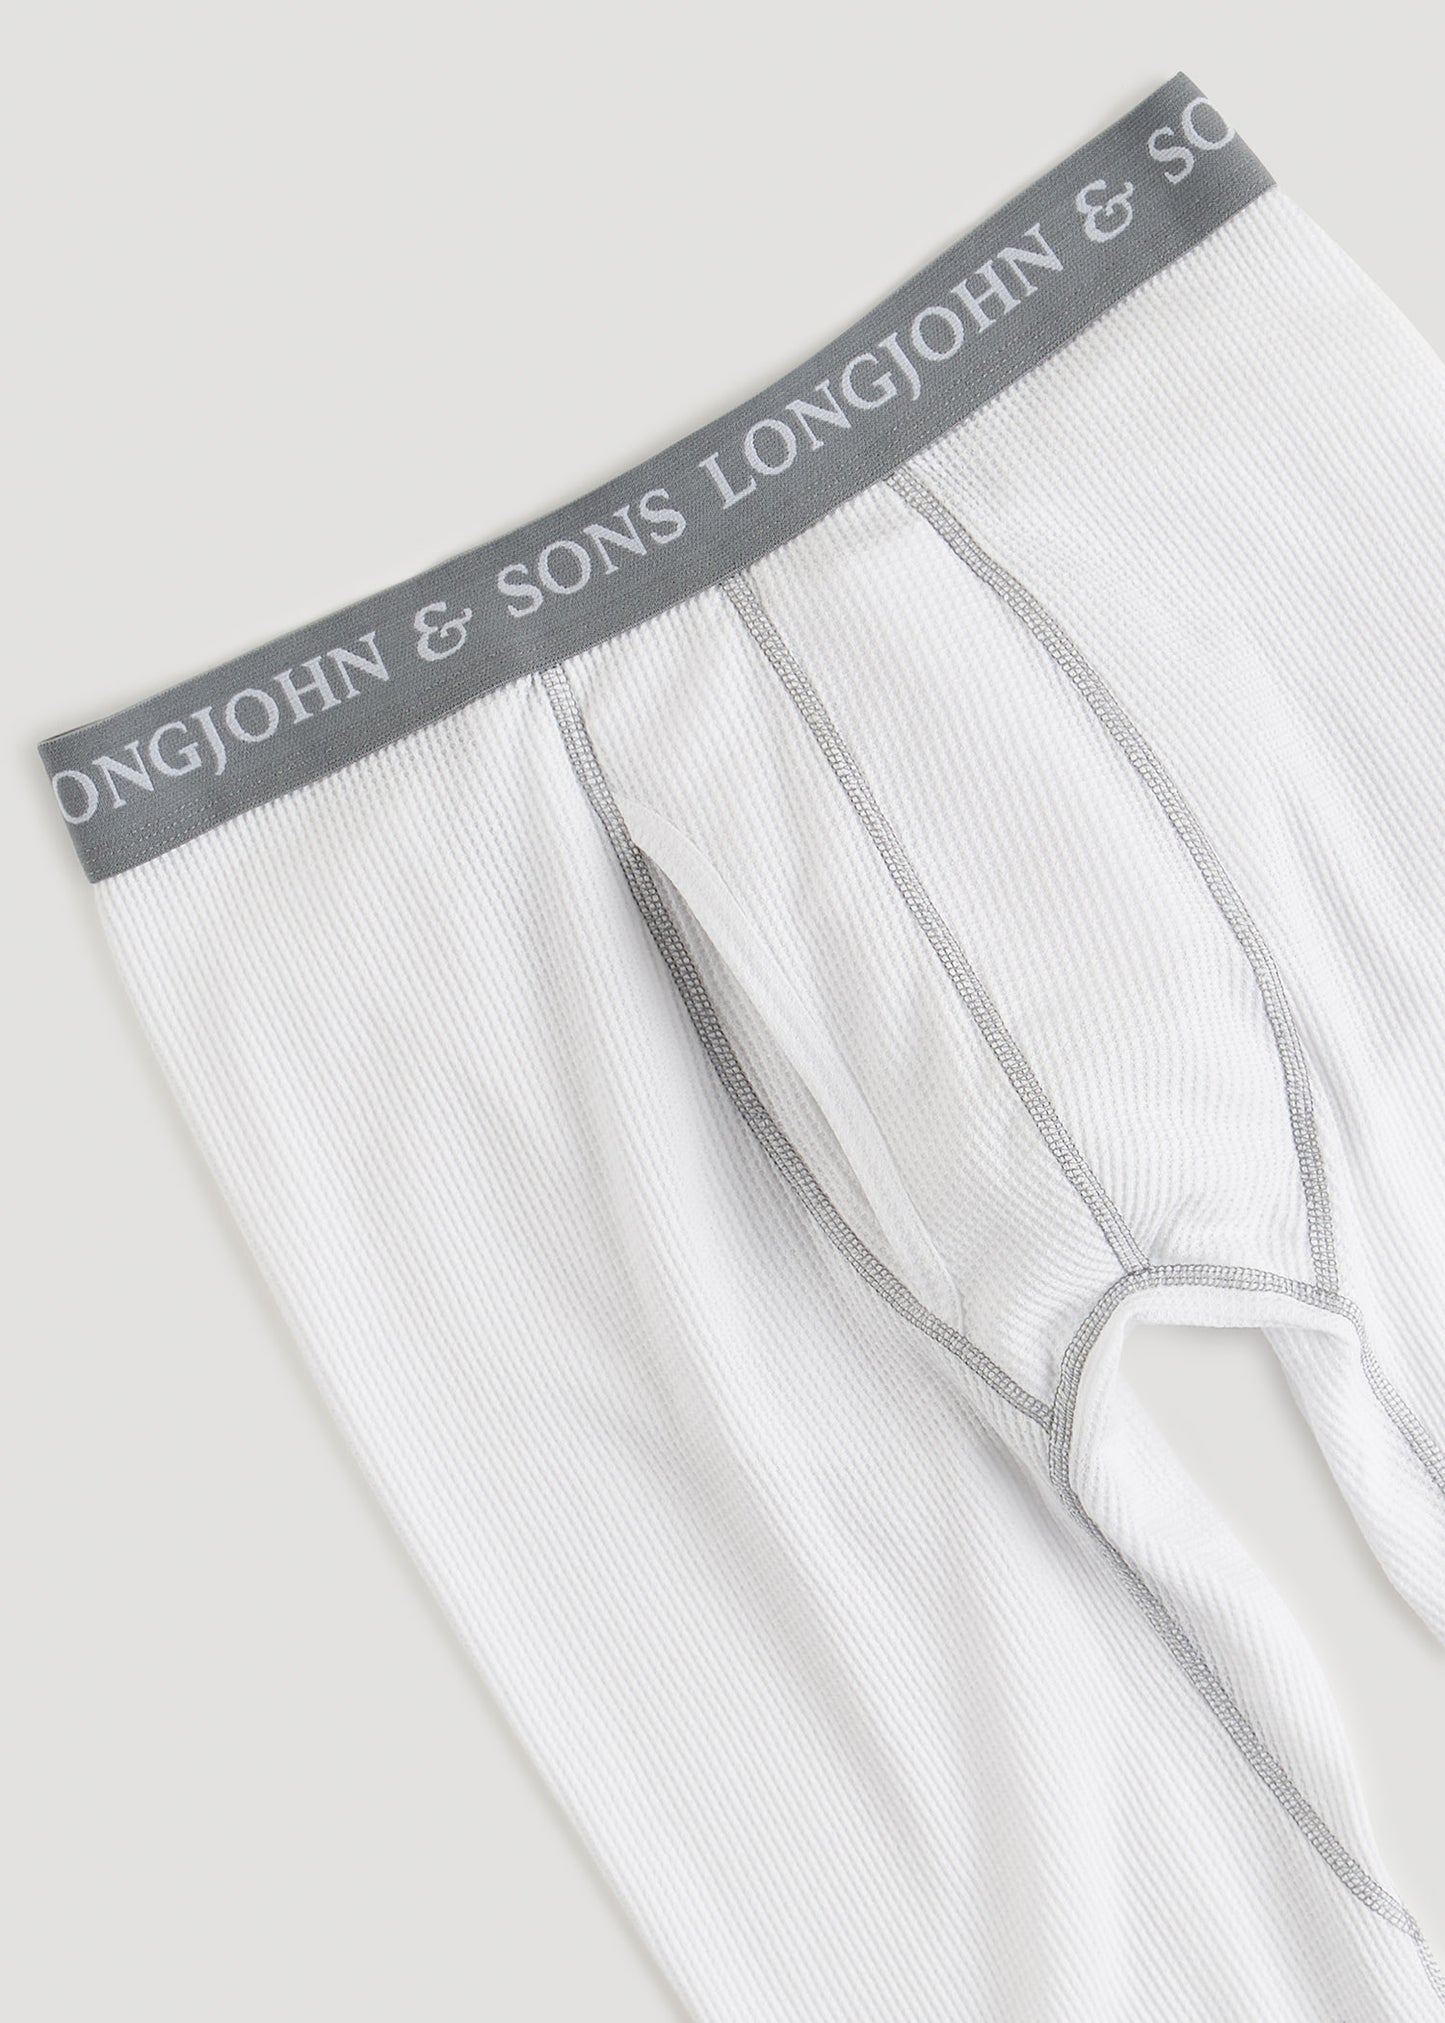 Cotton Plus Long Thermal Underwear Bottoms (Men's Big & Tall